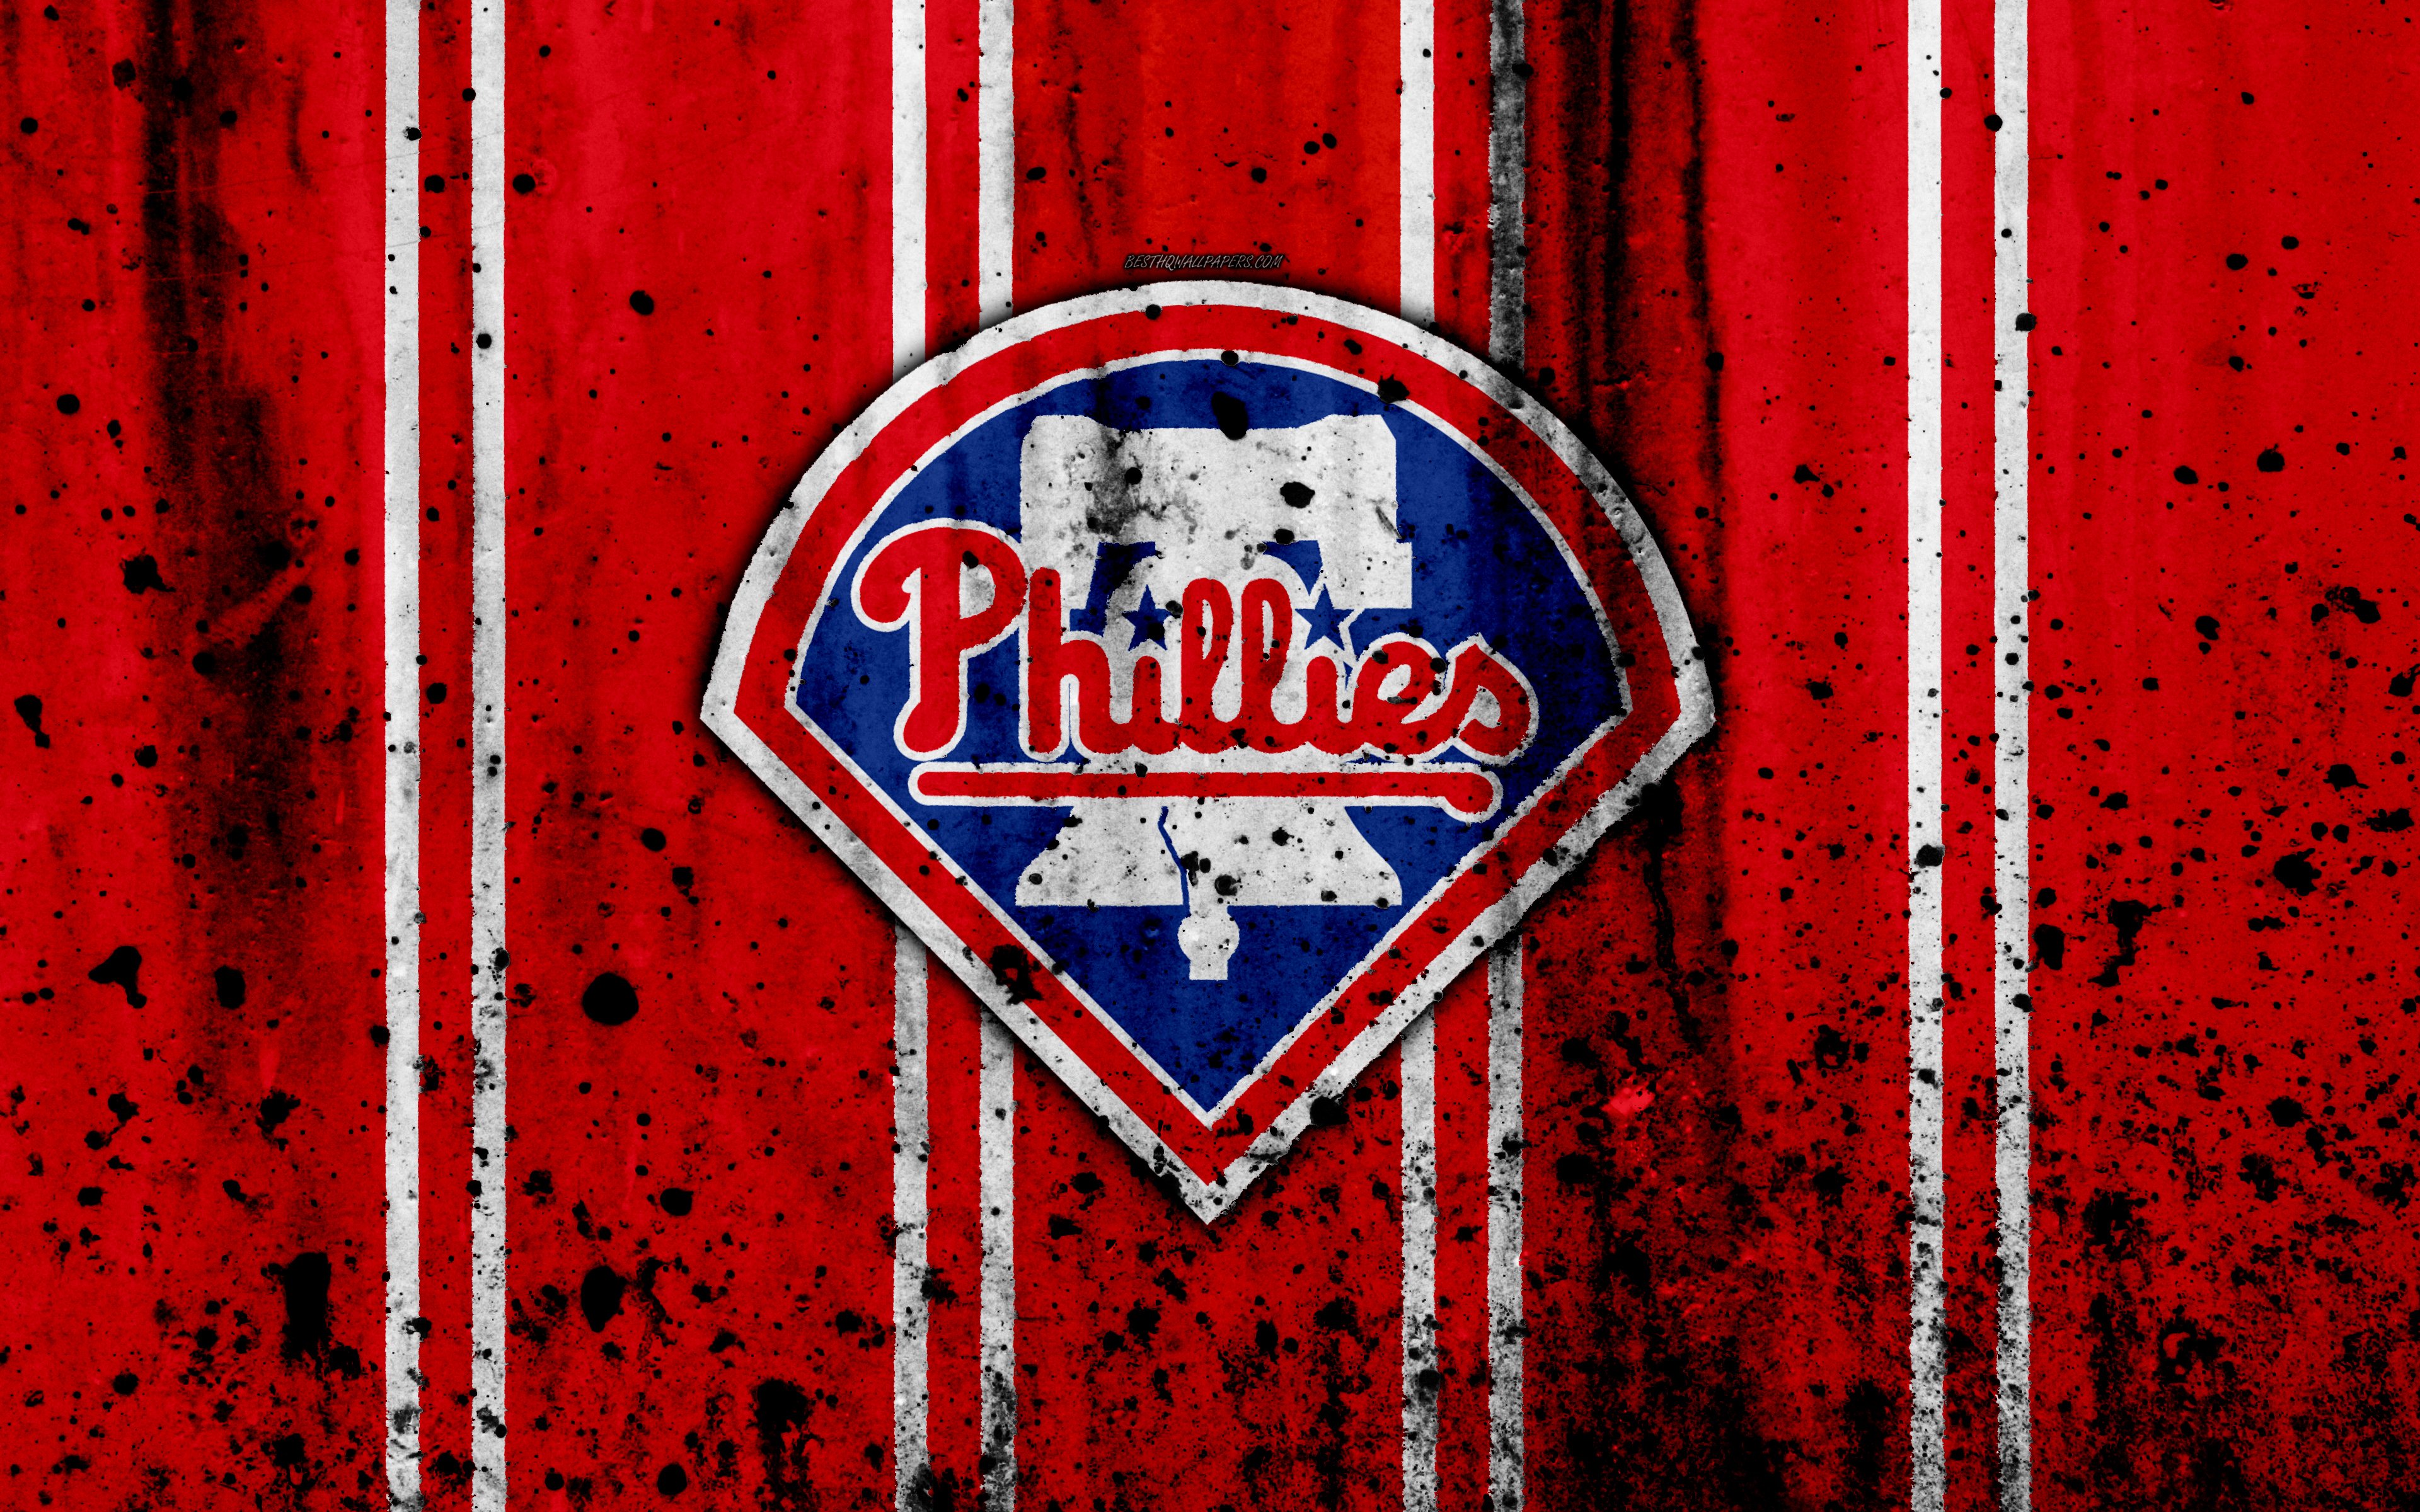 HD wallpaper: Baseball, Philadelphia Phillies